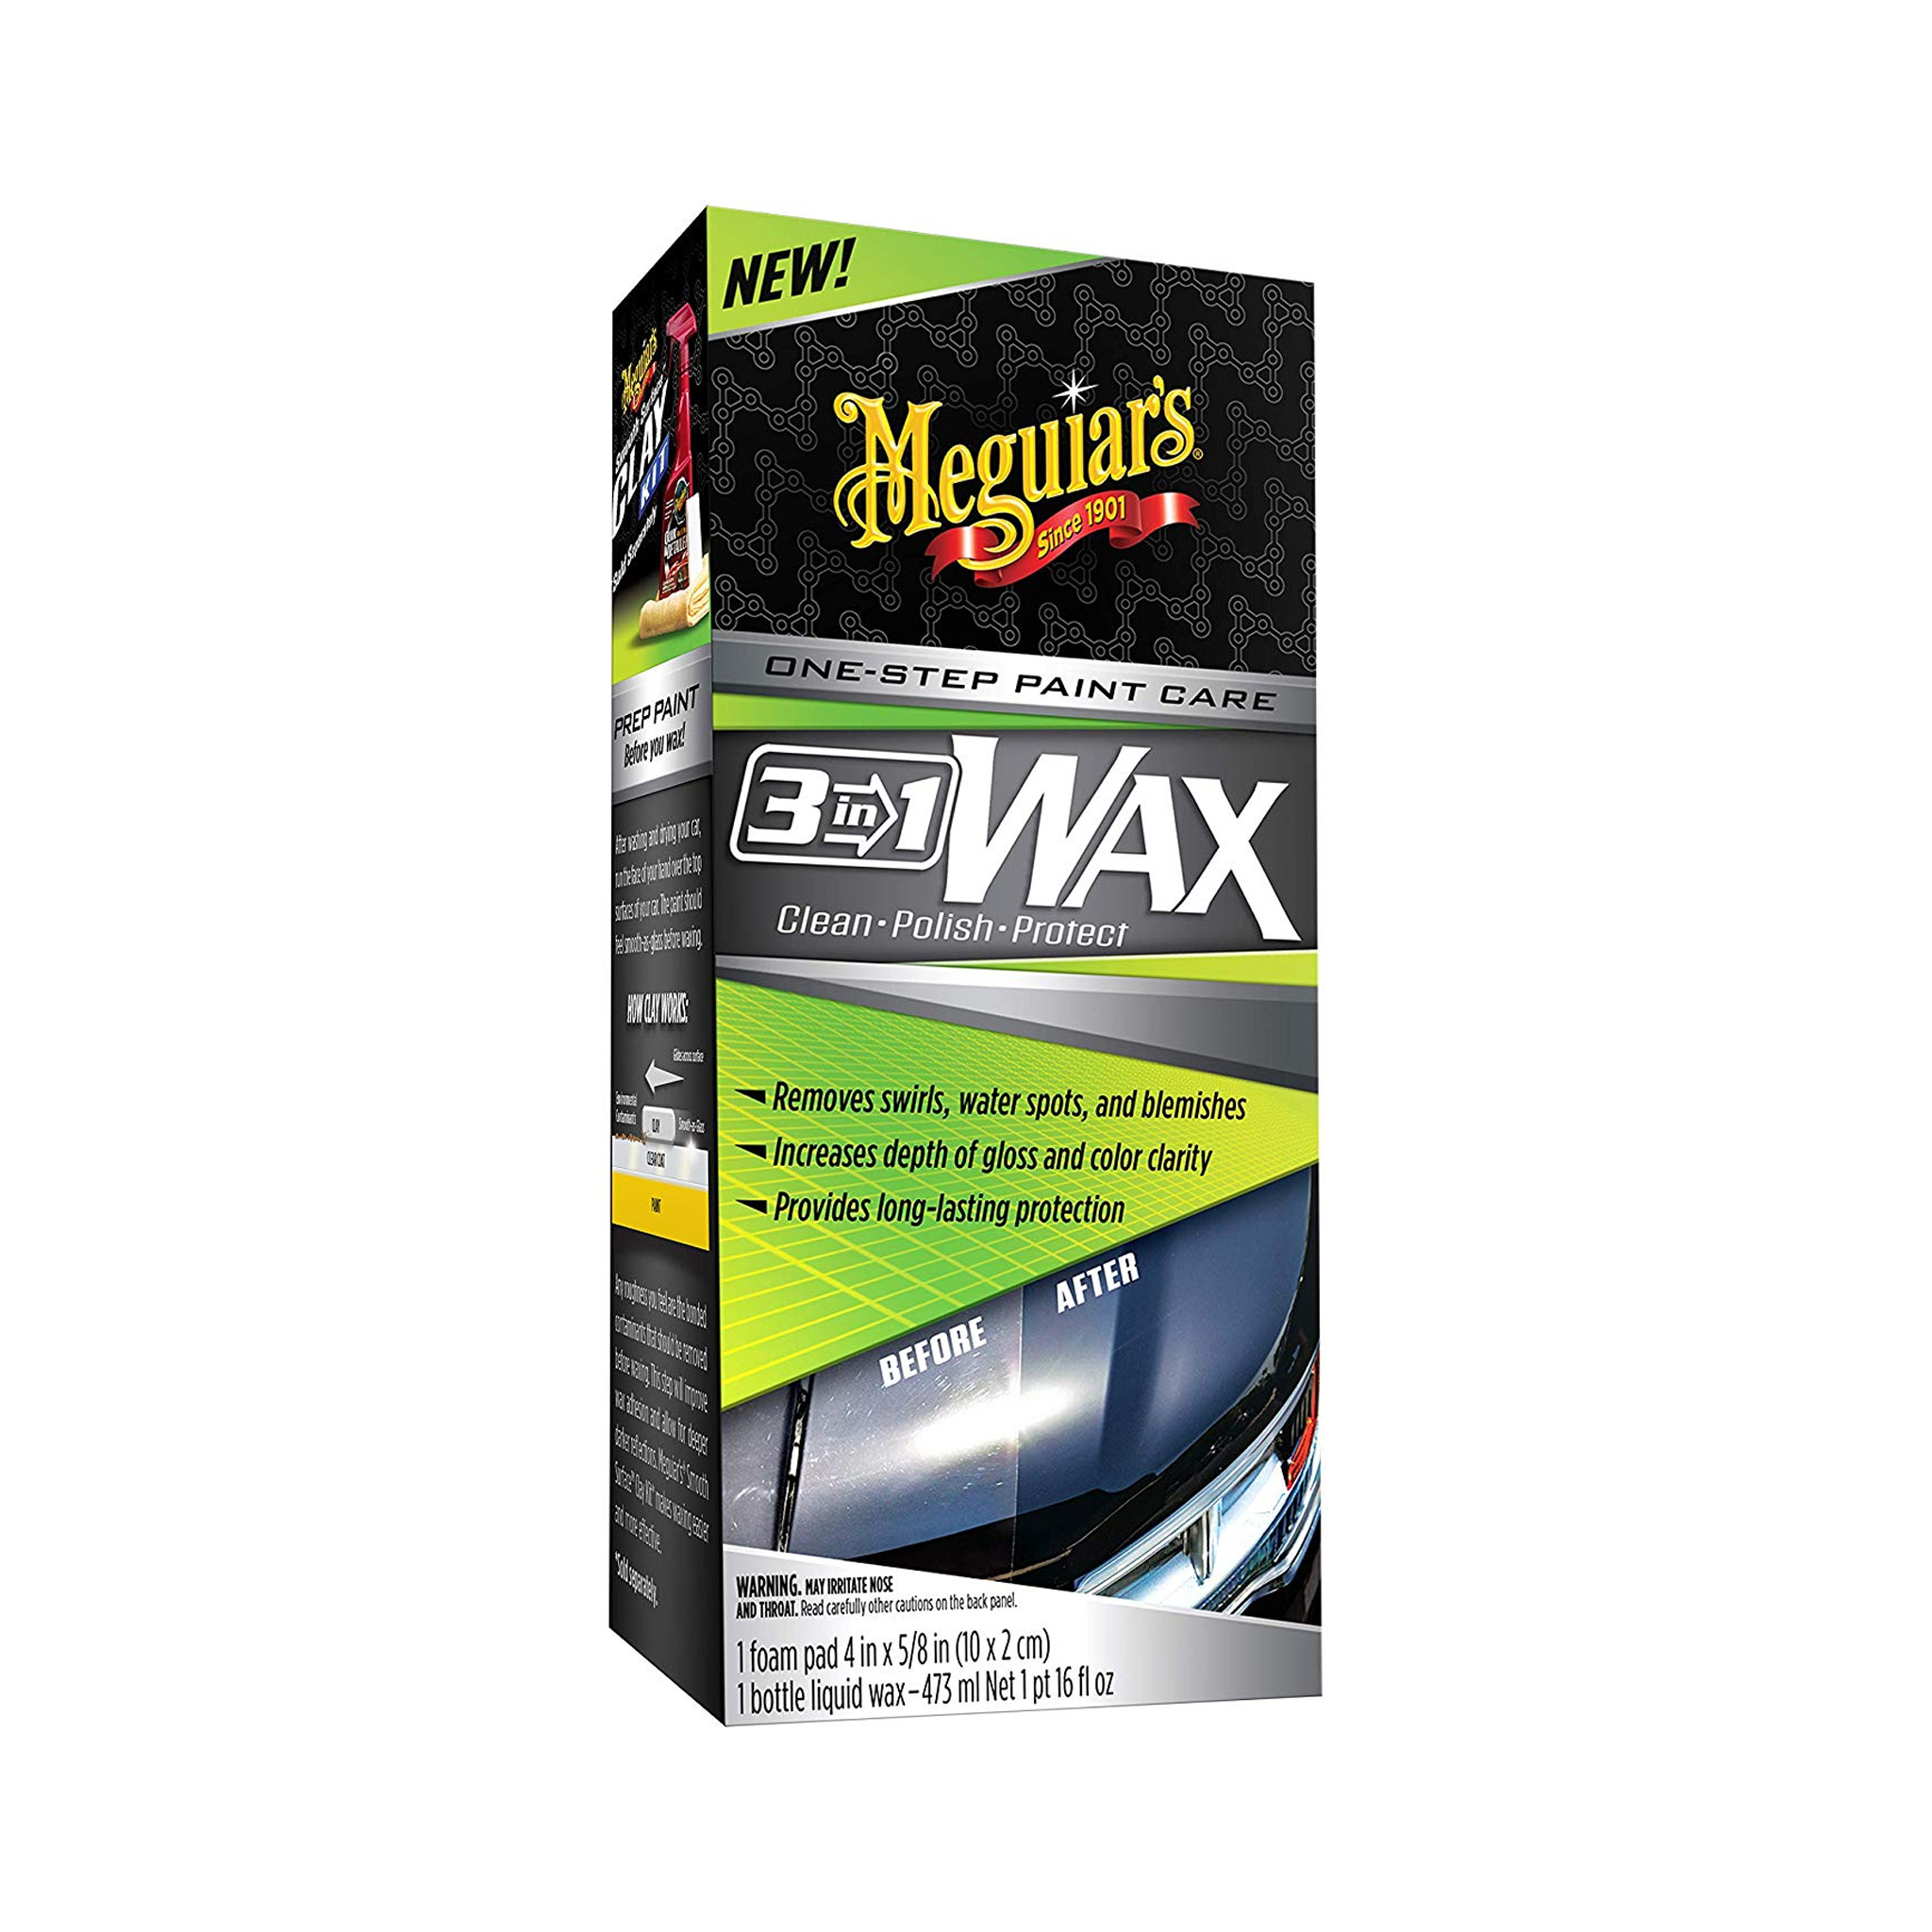 Meguiars 3 in 1 Wax